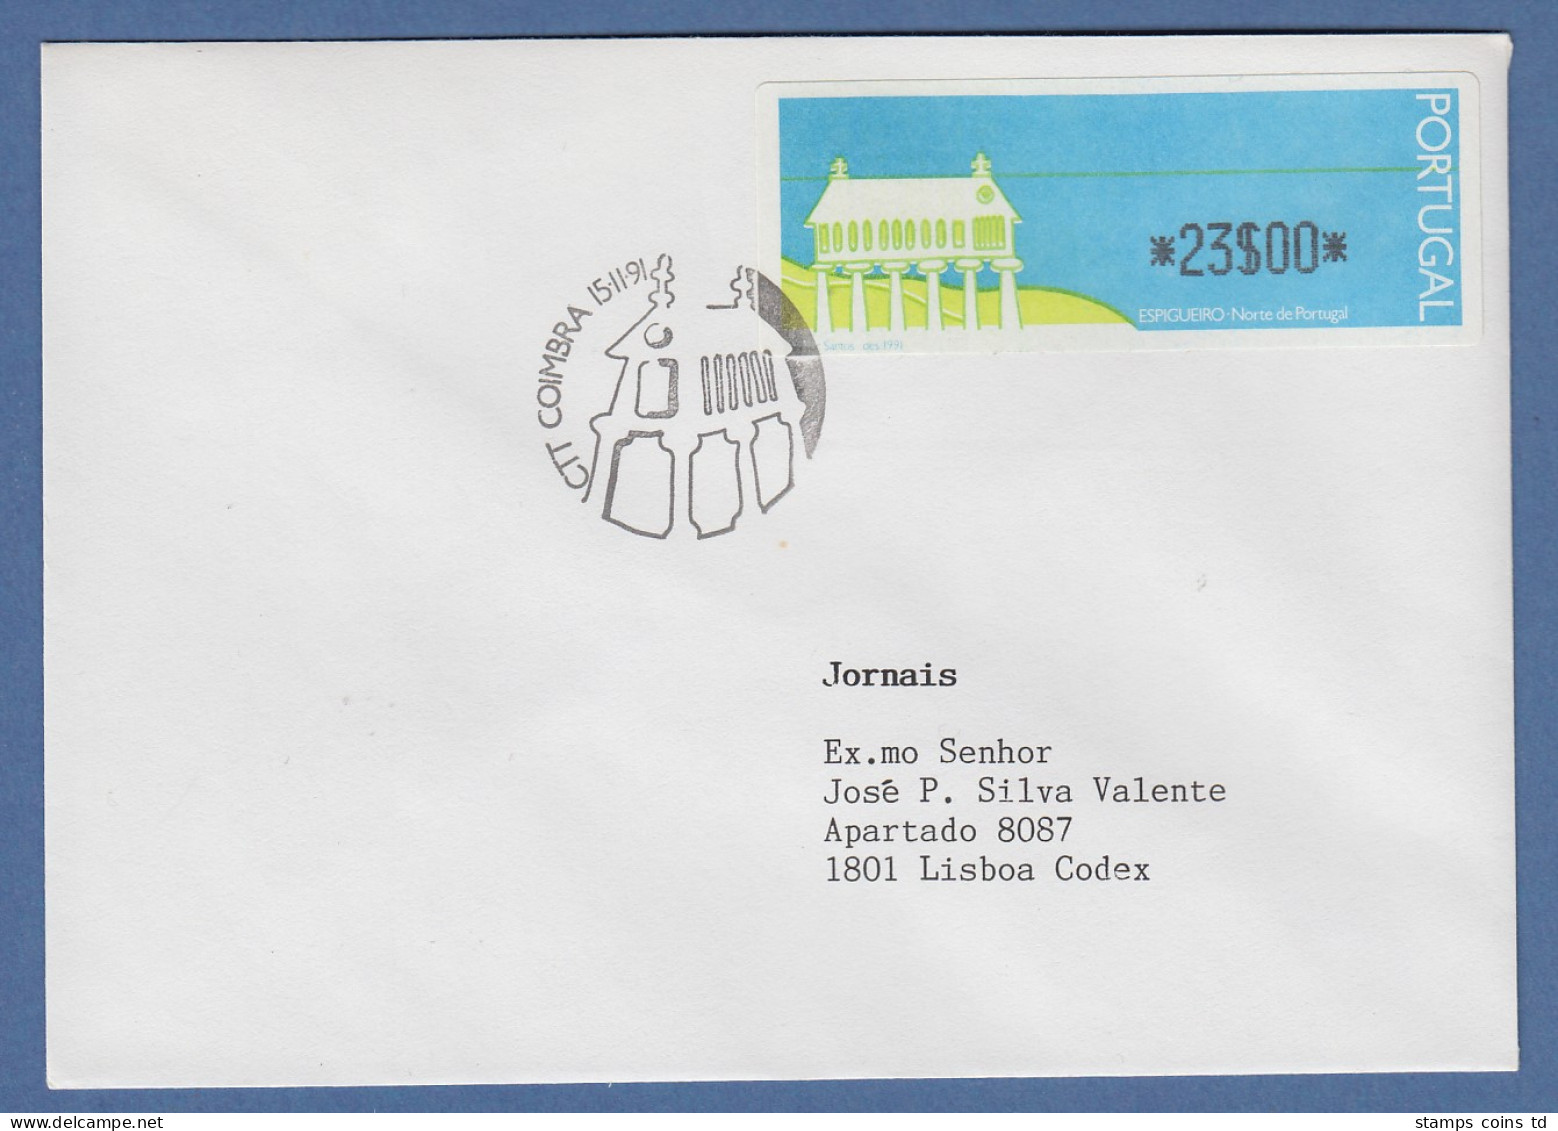 Portugal 1991 ATM Espigueiro Mi.-Nr. 3 Wert 23$00 Auf FDC Mit ET-O Coimbra - Machine Labels [ATM]